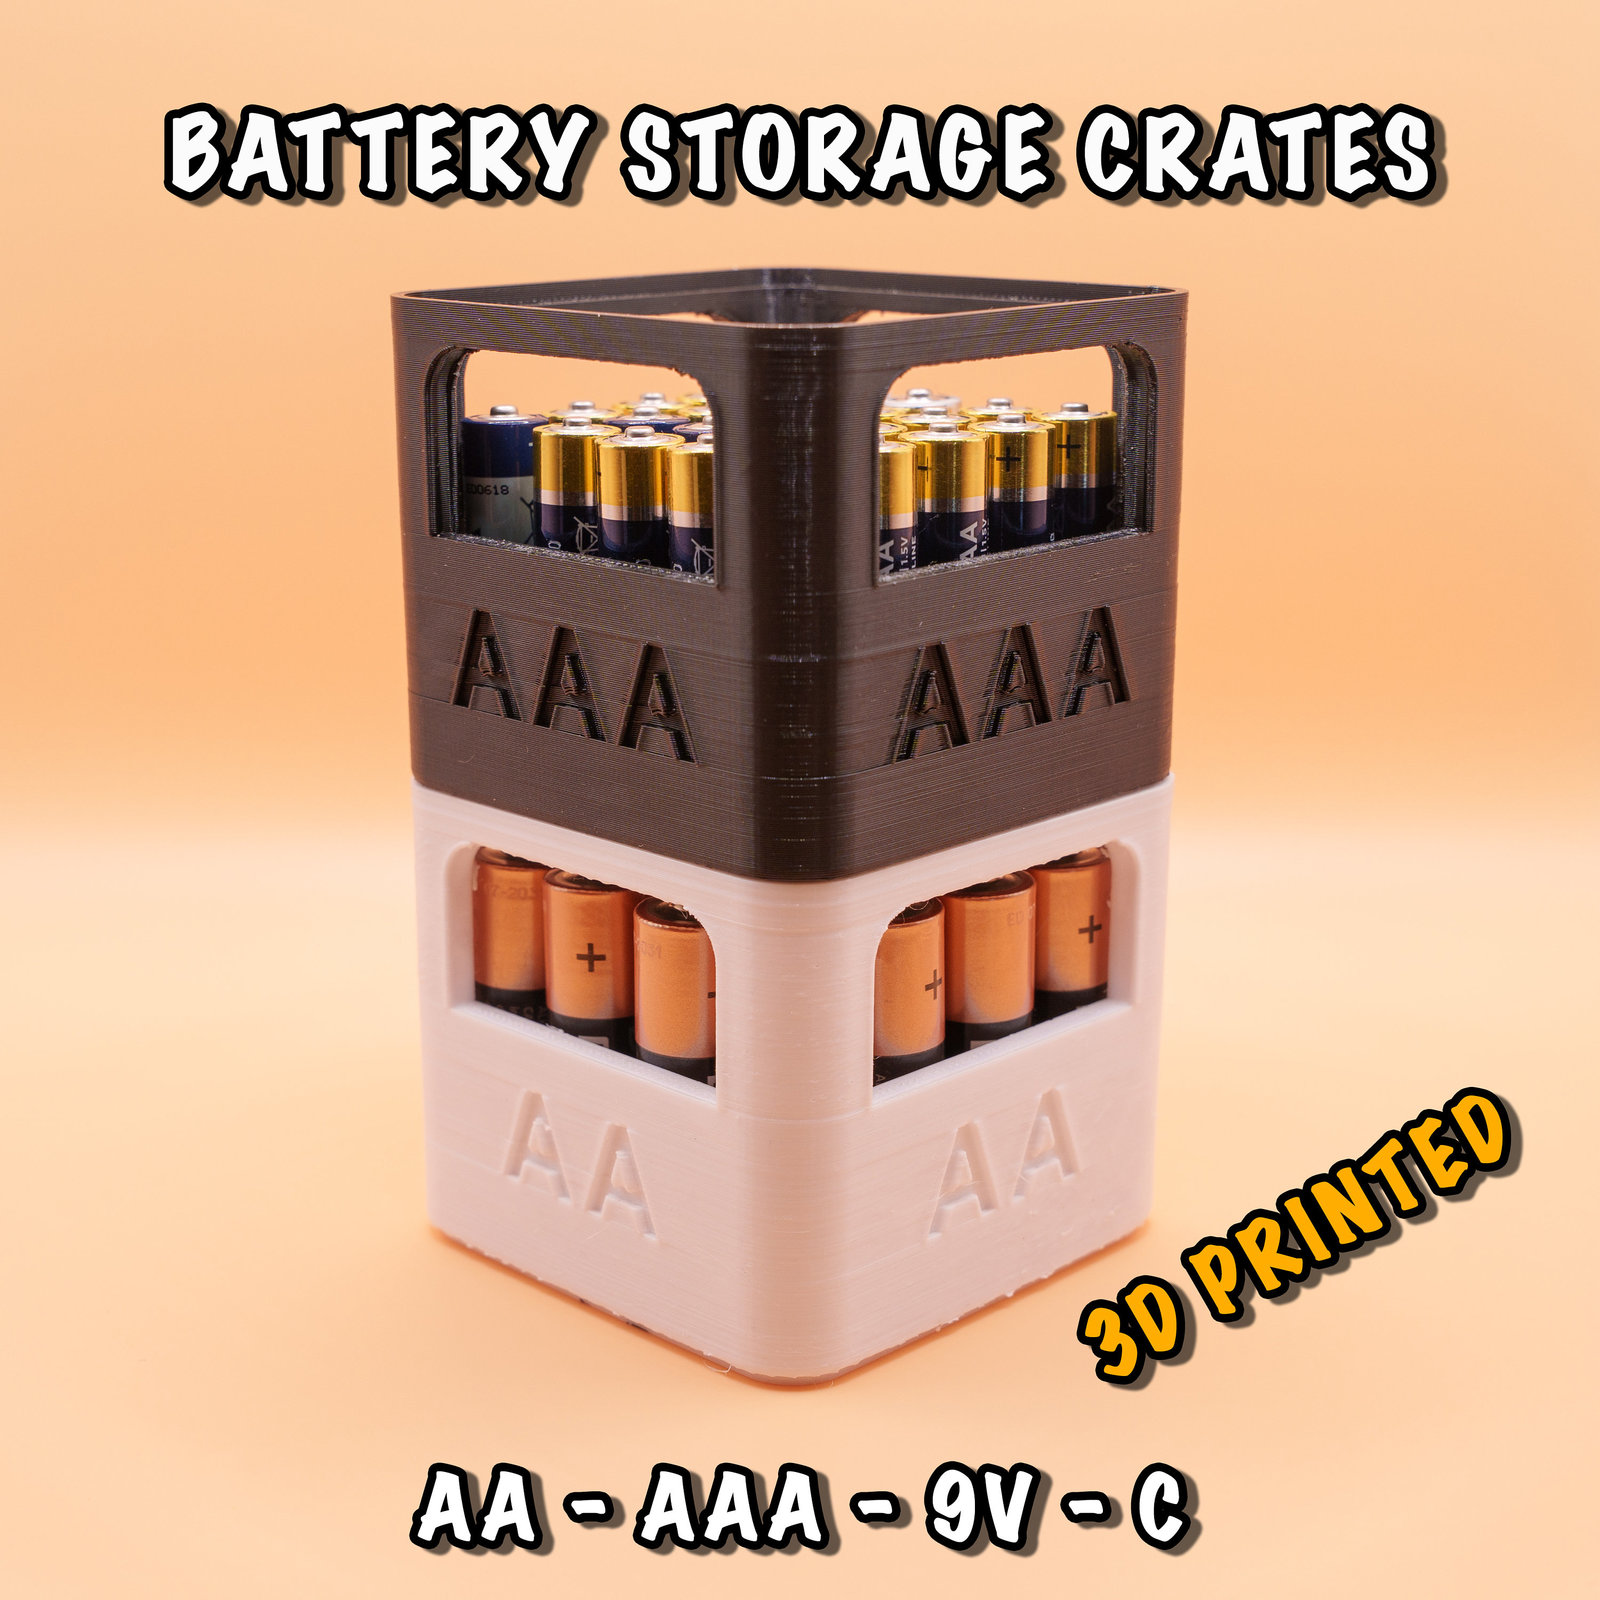 Battery Holders - Stackable AA, AAA, 9V - $9.90 - $9.95